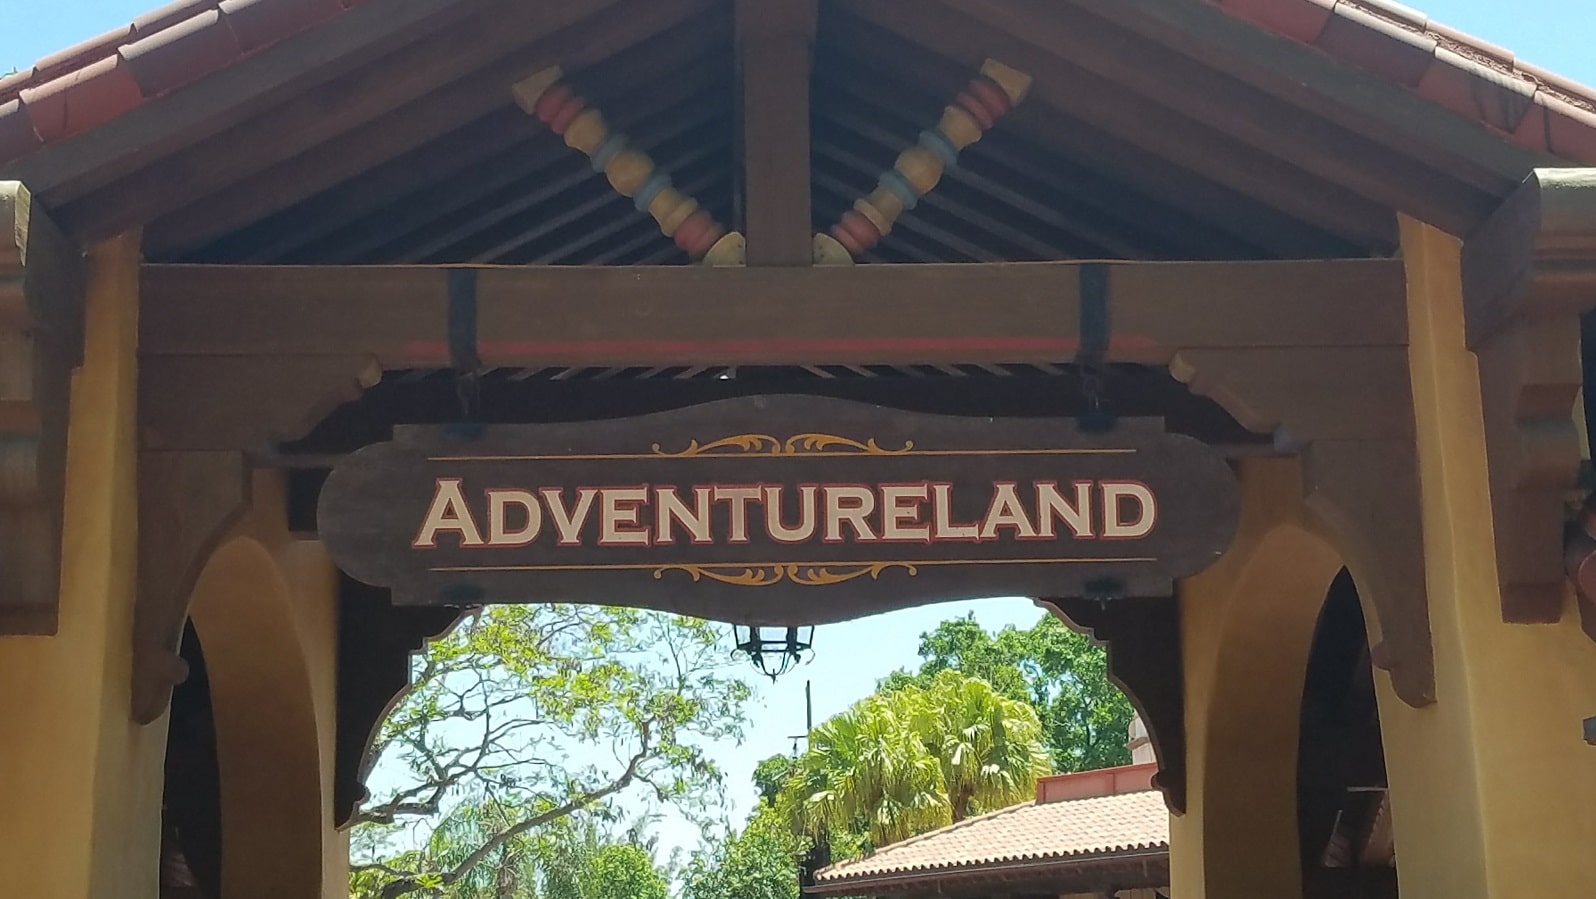 Magic Kingdom adventureland History